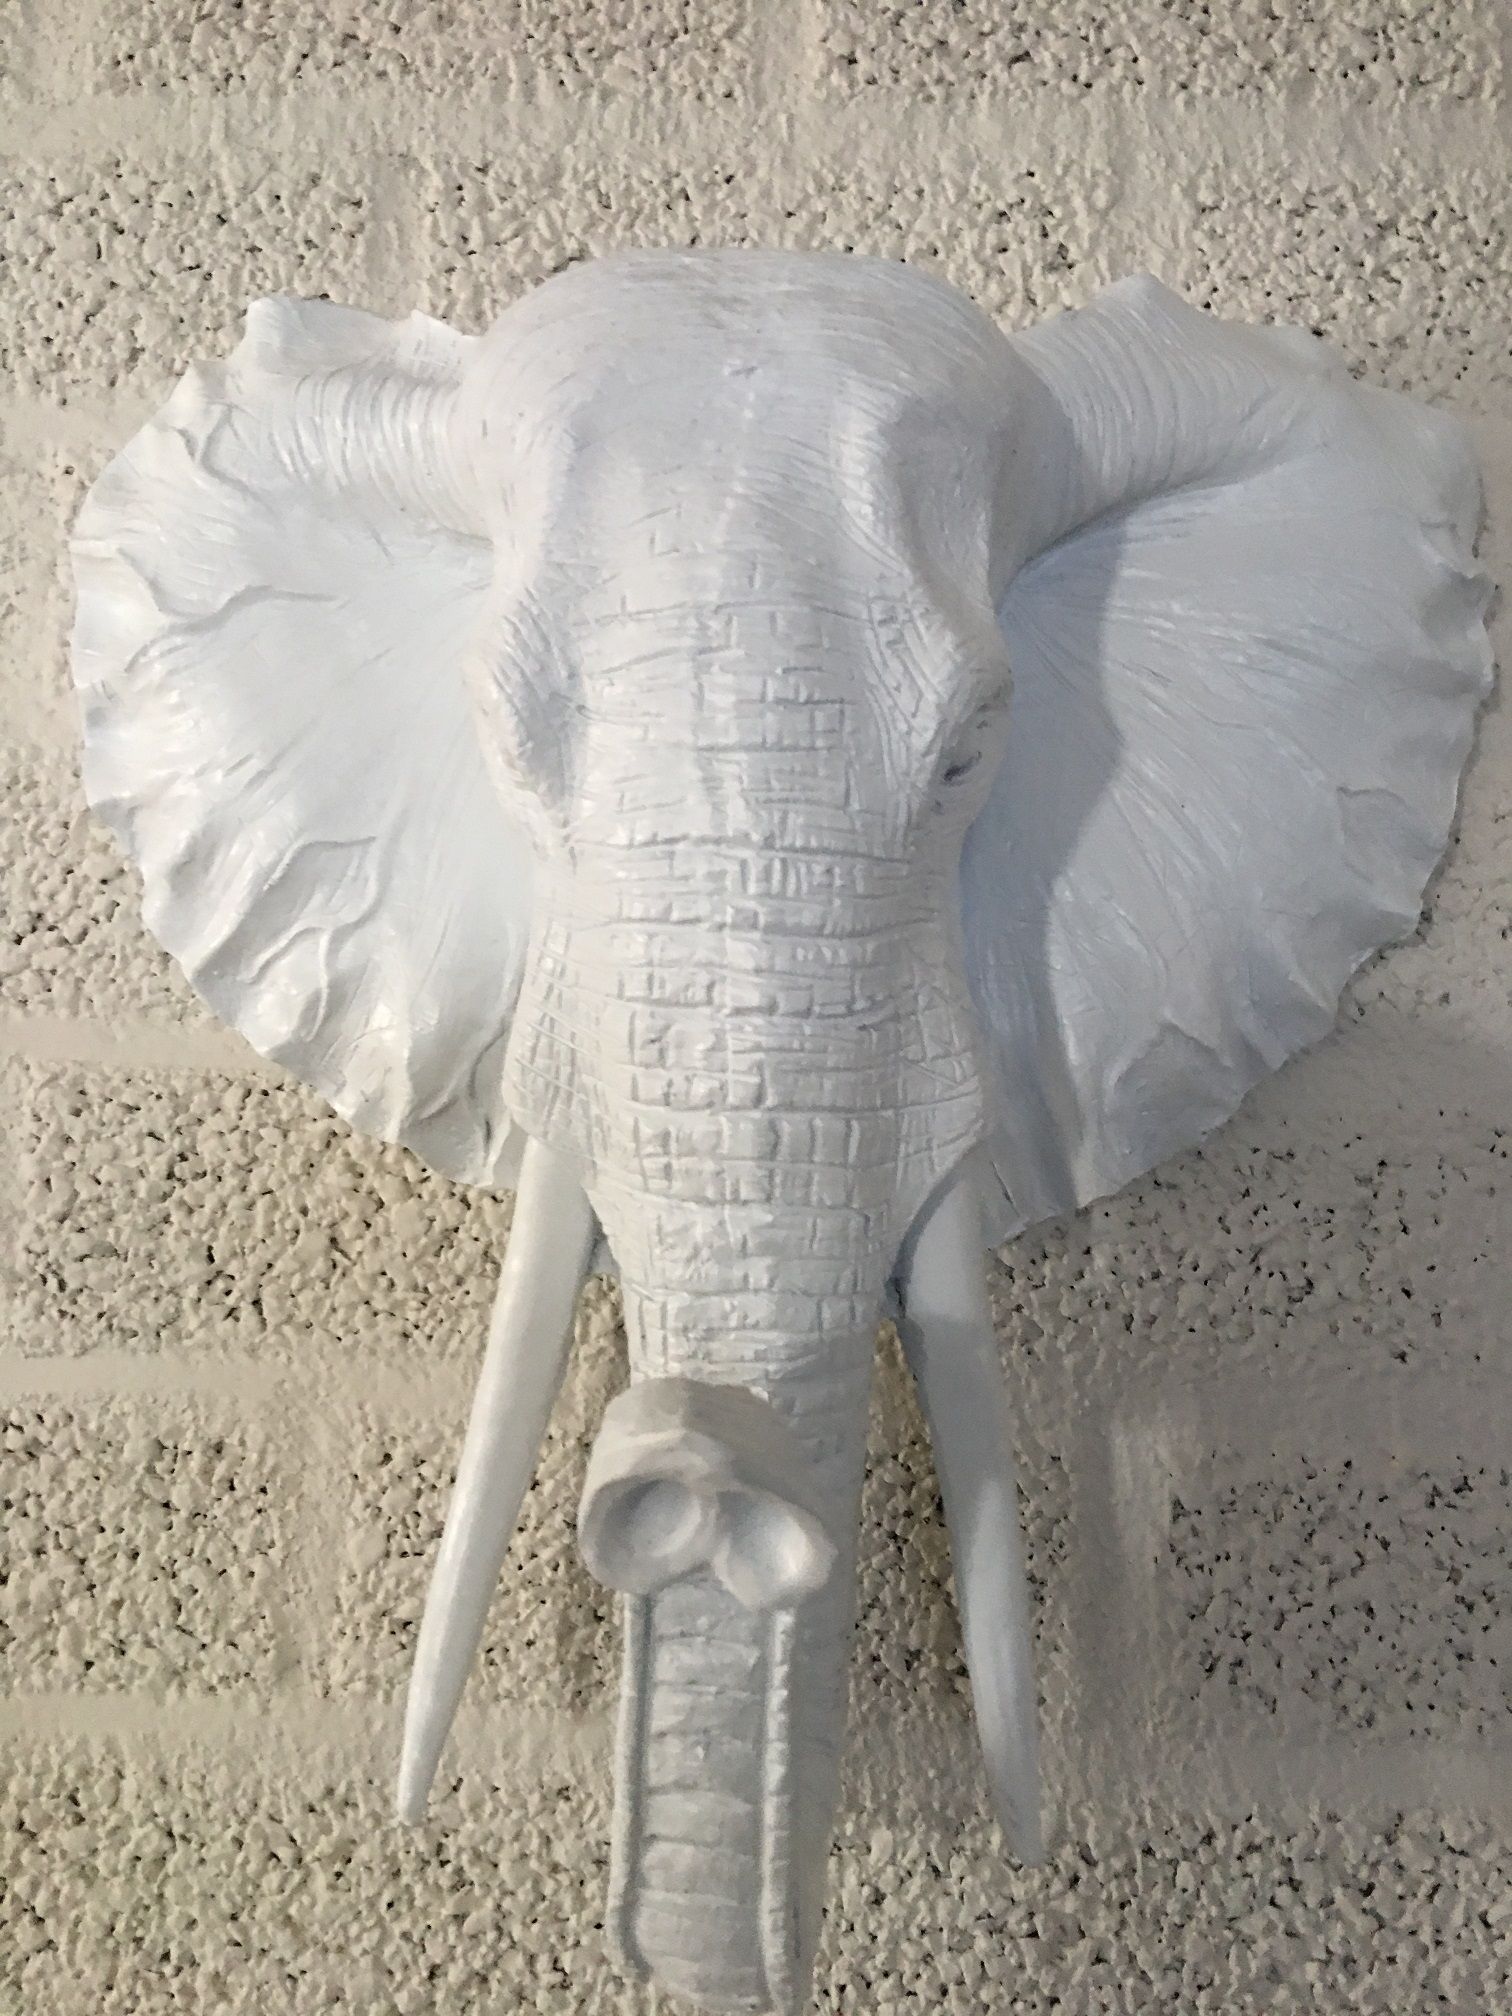 Mooie witte olifantenkop wandornament, prachtig!!